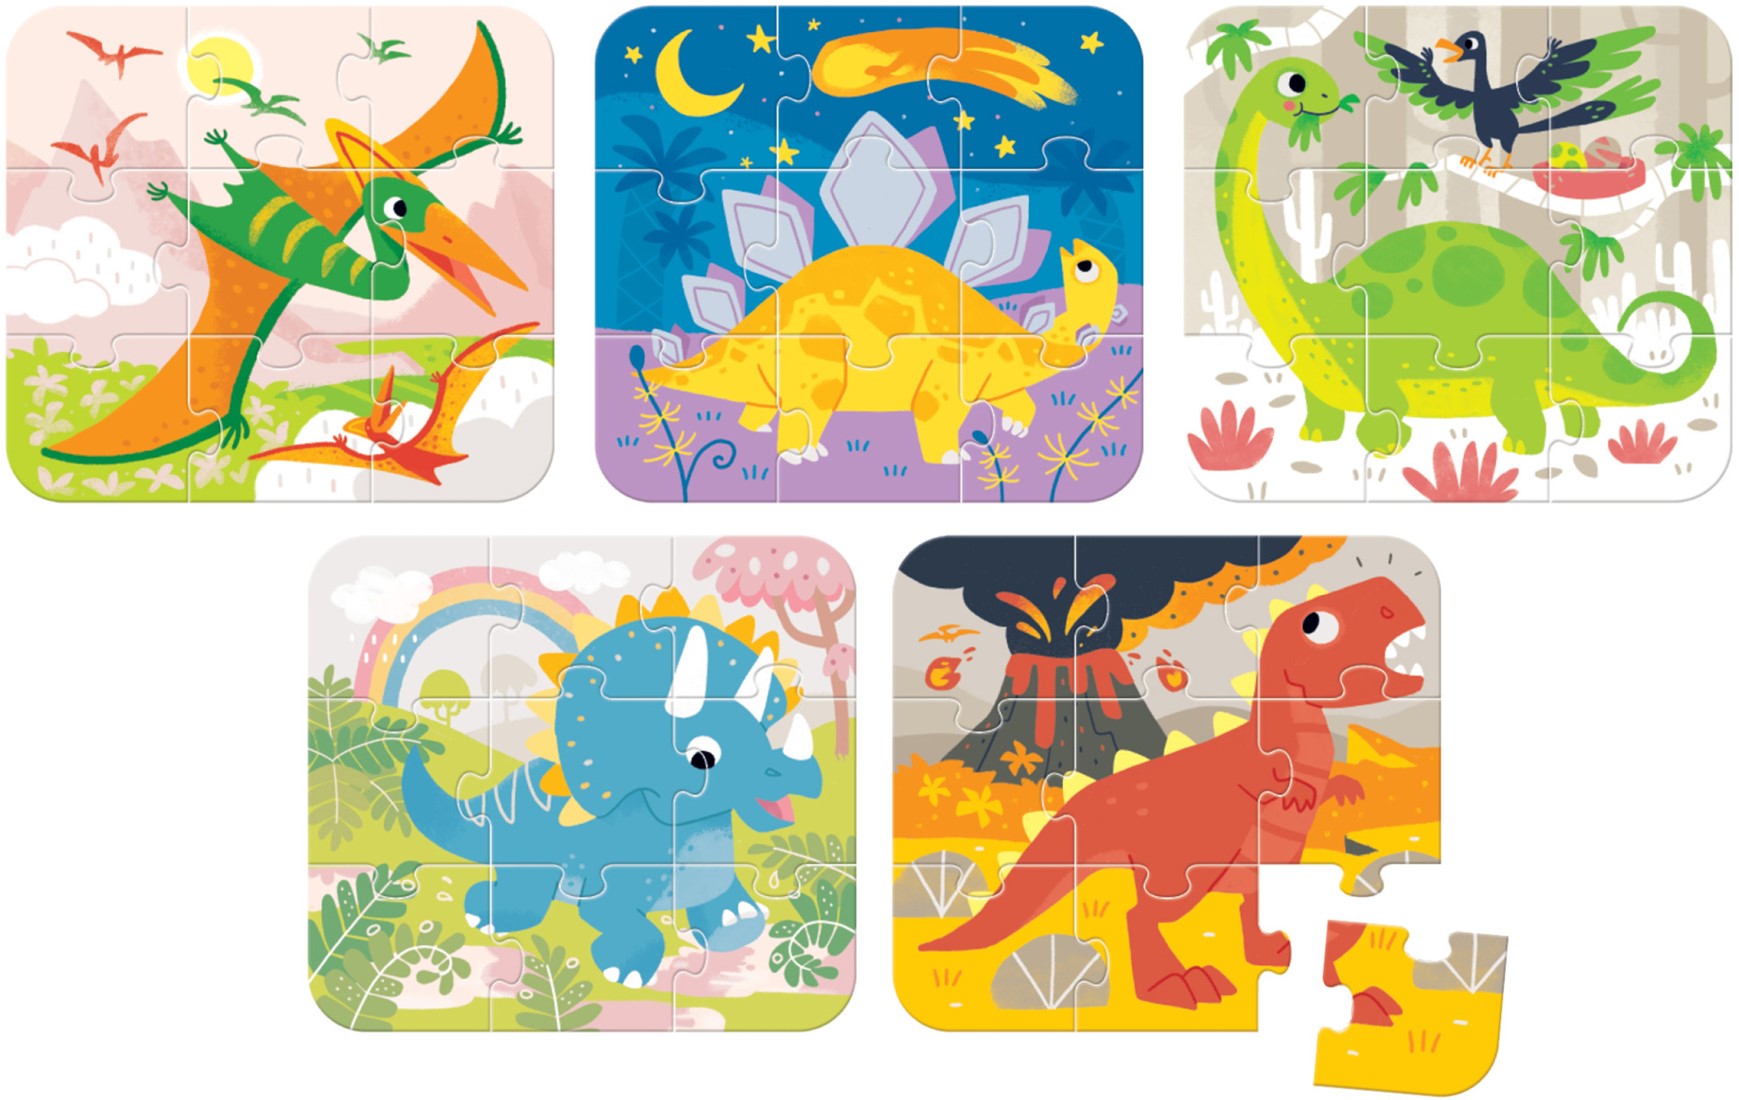 rommel Vermelden Lach Banana Panda On-the-Go Puzzel dinosaurussen 3+ - VIJF puzzels van 9 stukjes  - Leuk dino puzzel speelgoed